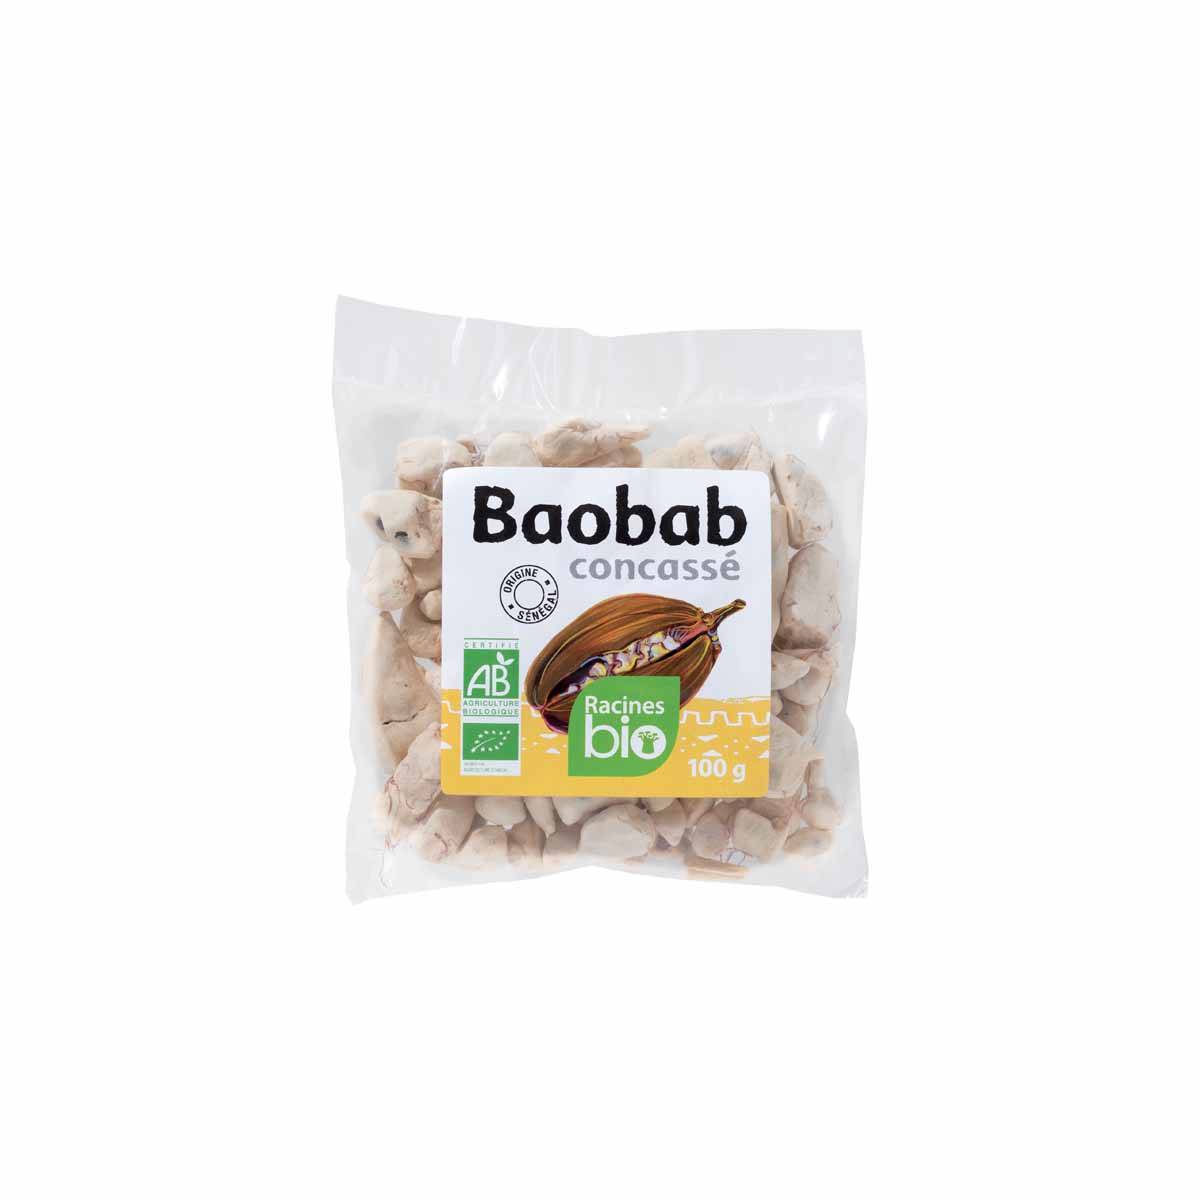 Poudre de Baobab Bio 150g - Racines-Sa